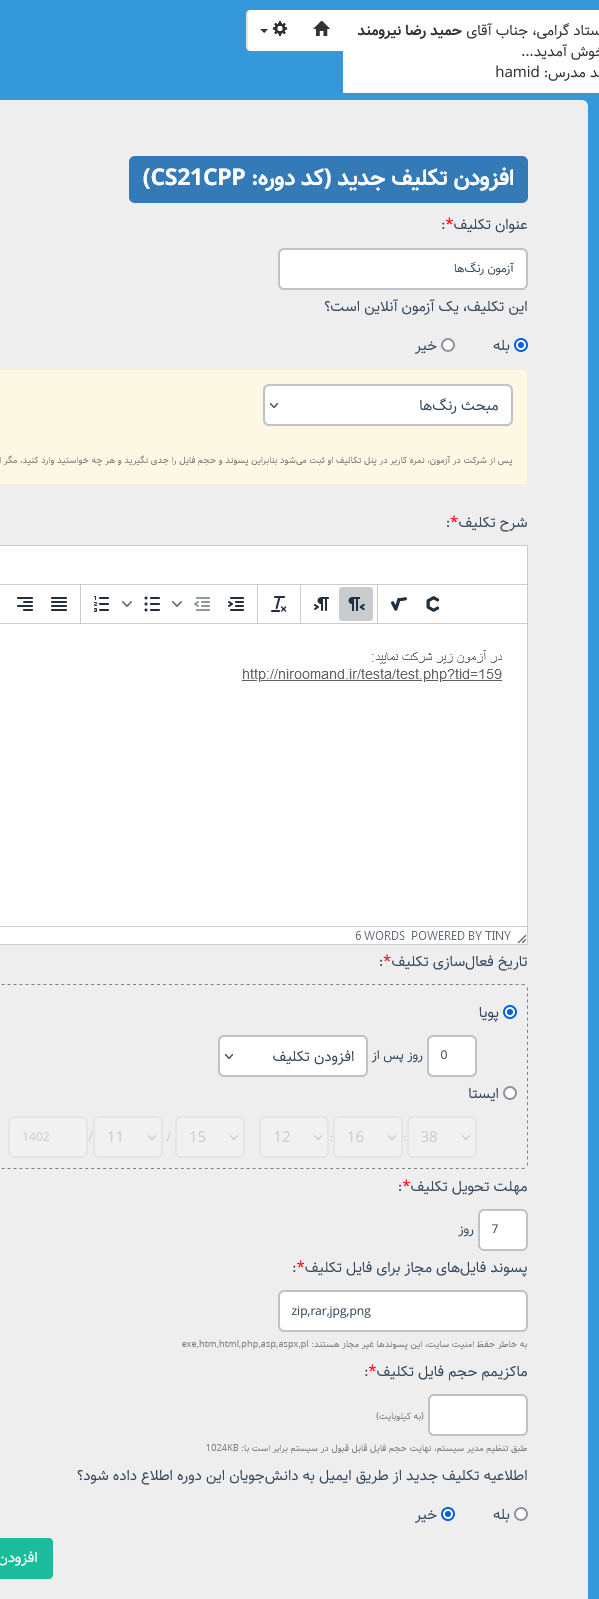 https://img.aftab.cc/news/1402/nomra_3_2_screenshot_teacer_panel_homework.png